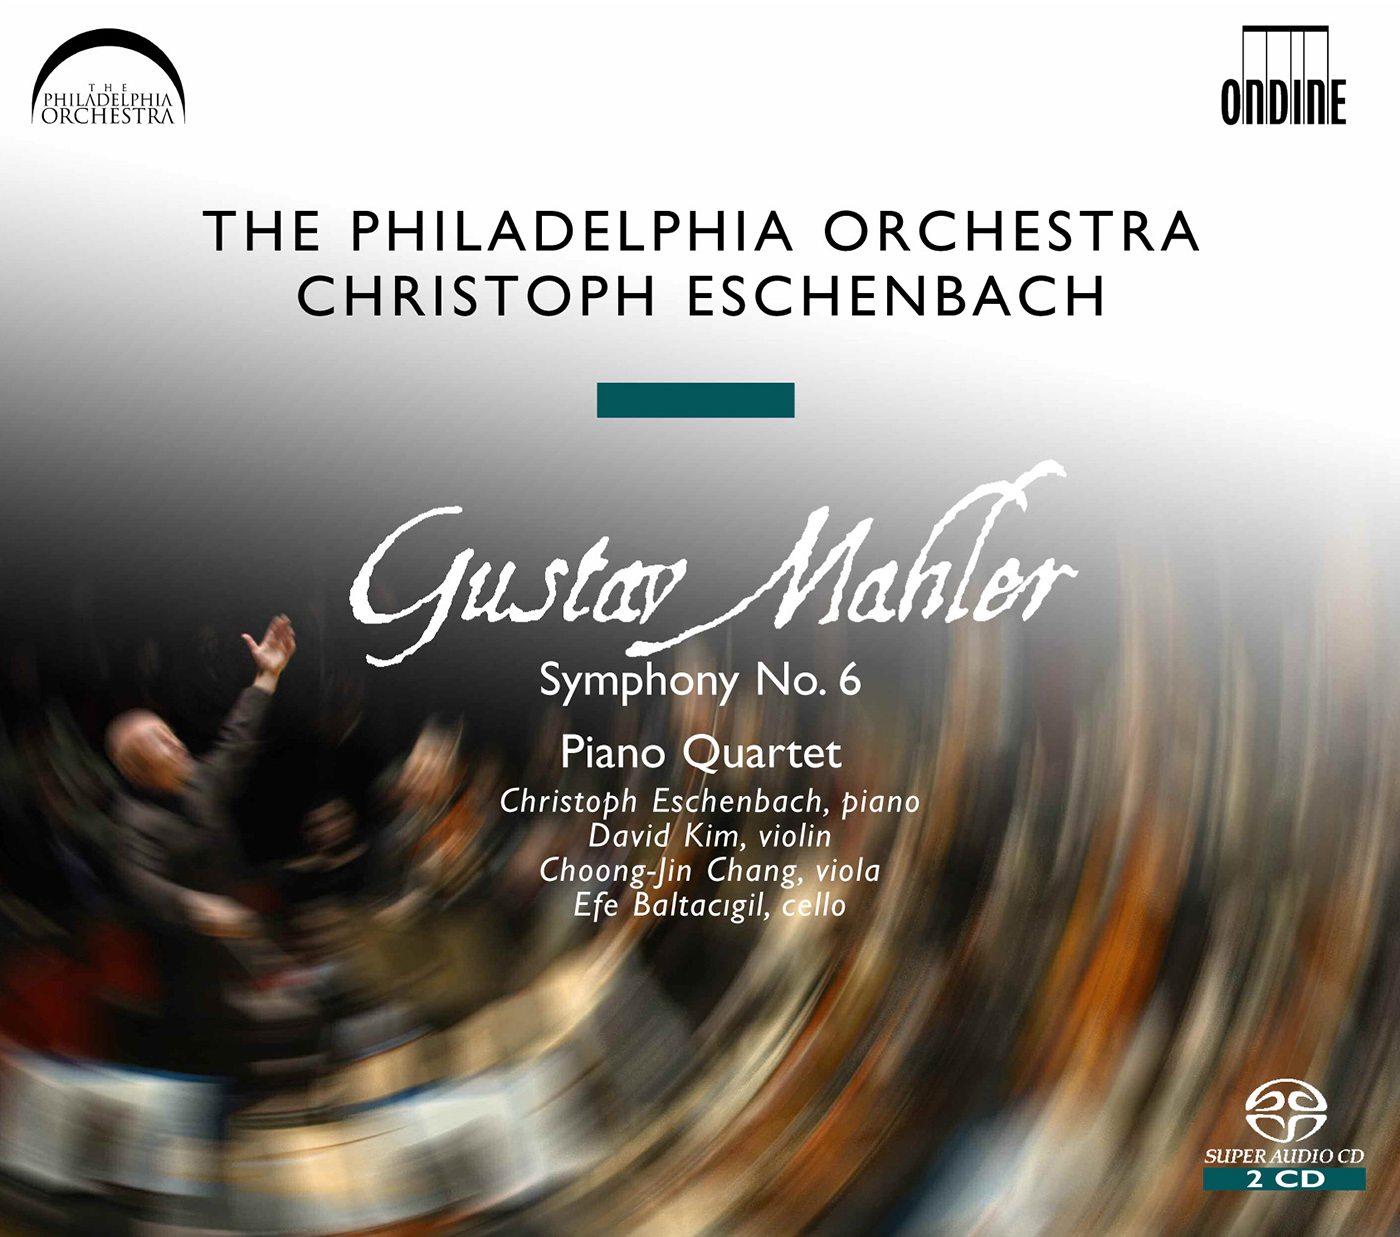 MAHLER, G.: Symphony No. 6, "Tragic" / Piano Quartet in A Minor